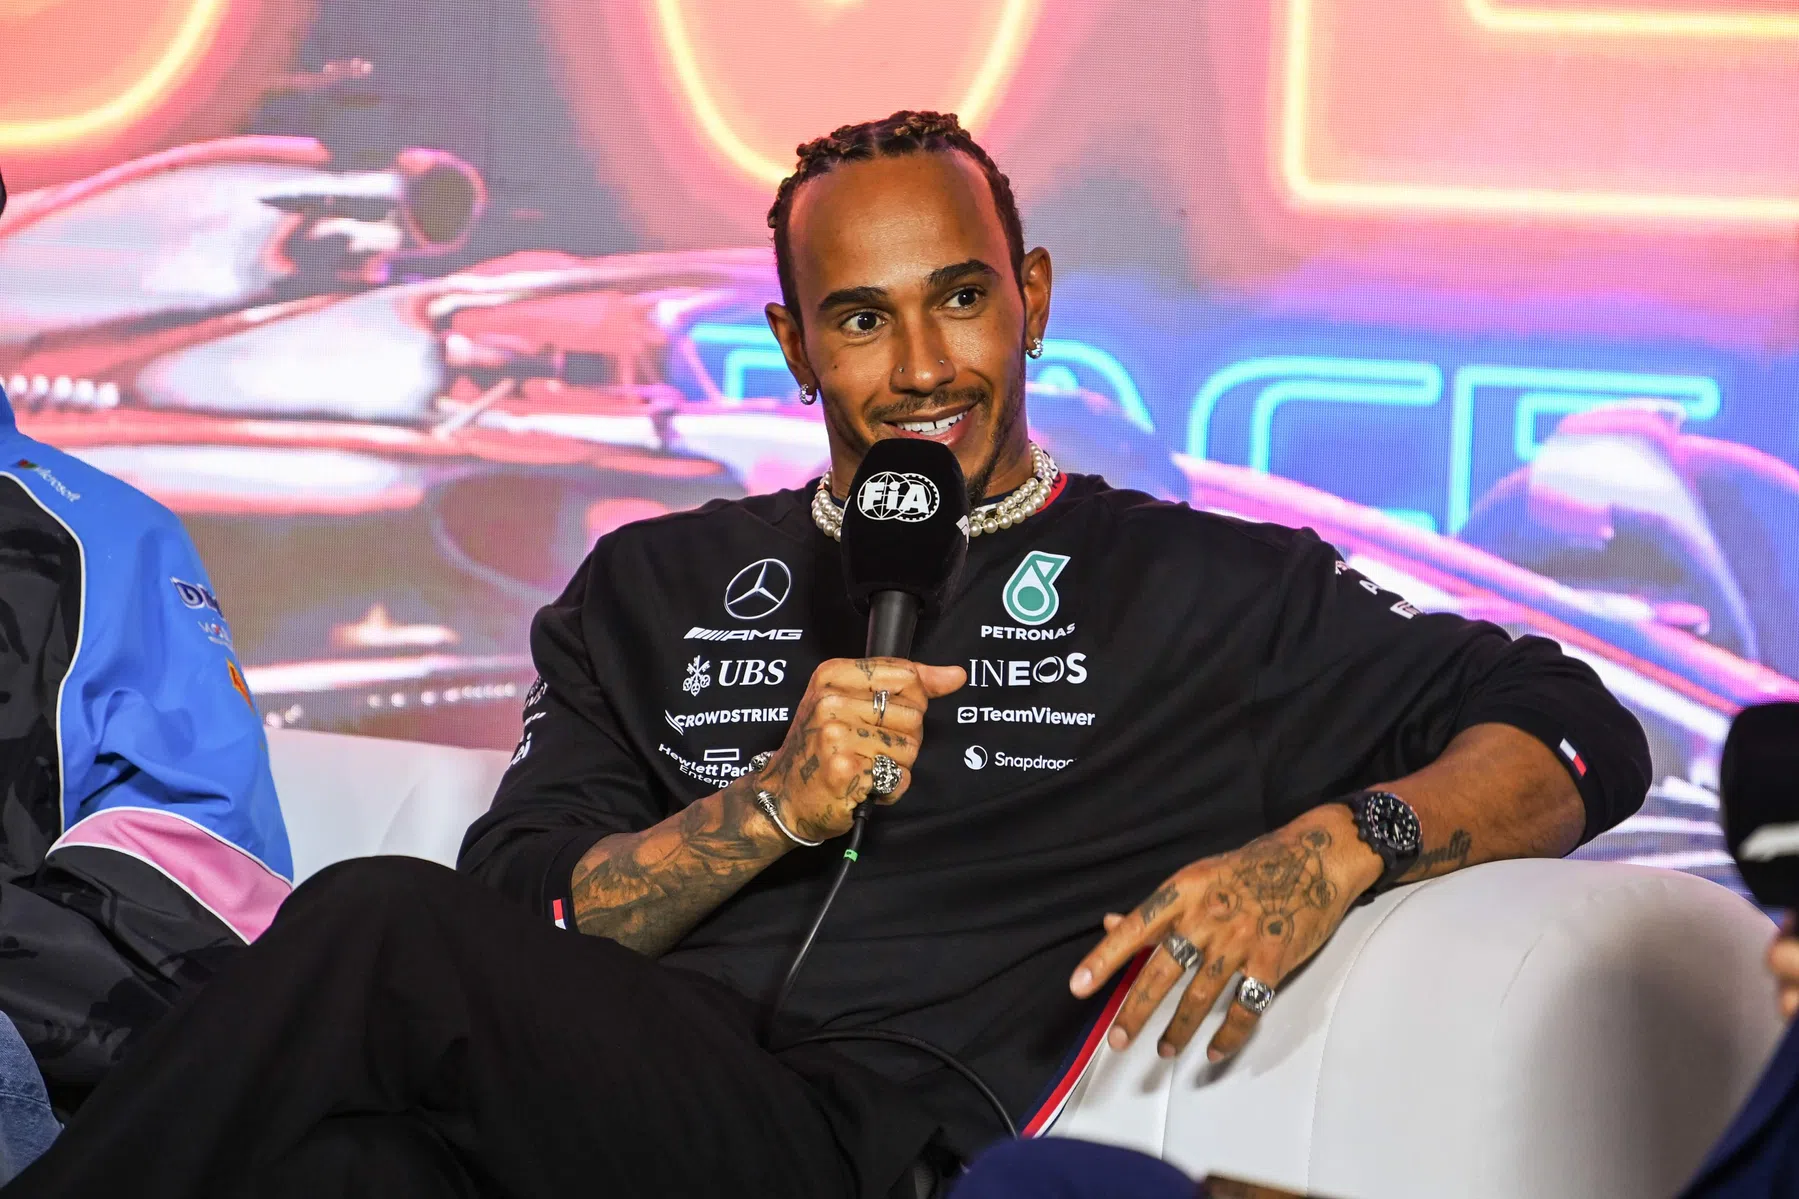 Lewis Hamilton over much inquiring F1 schedule